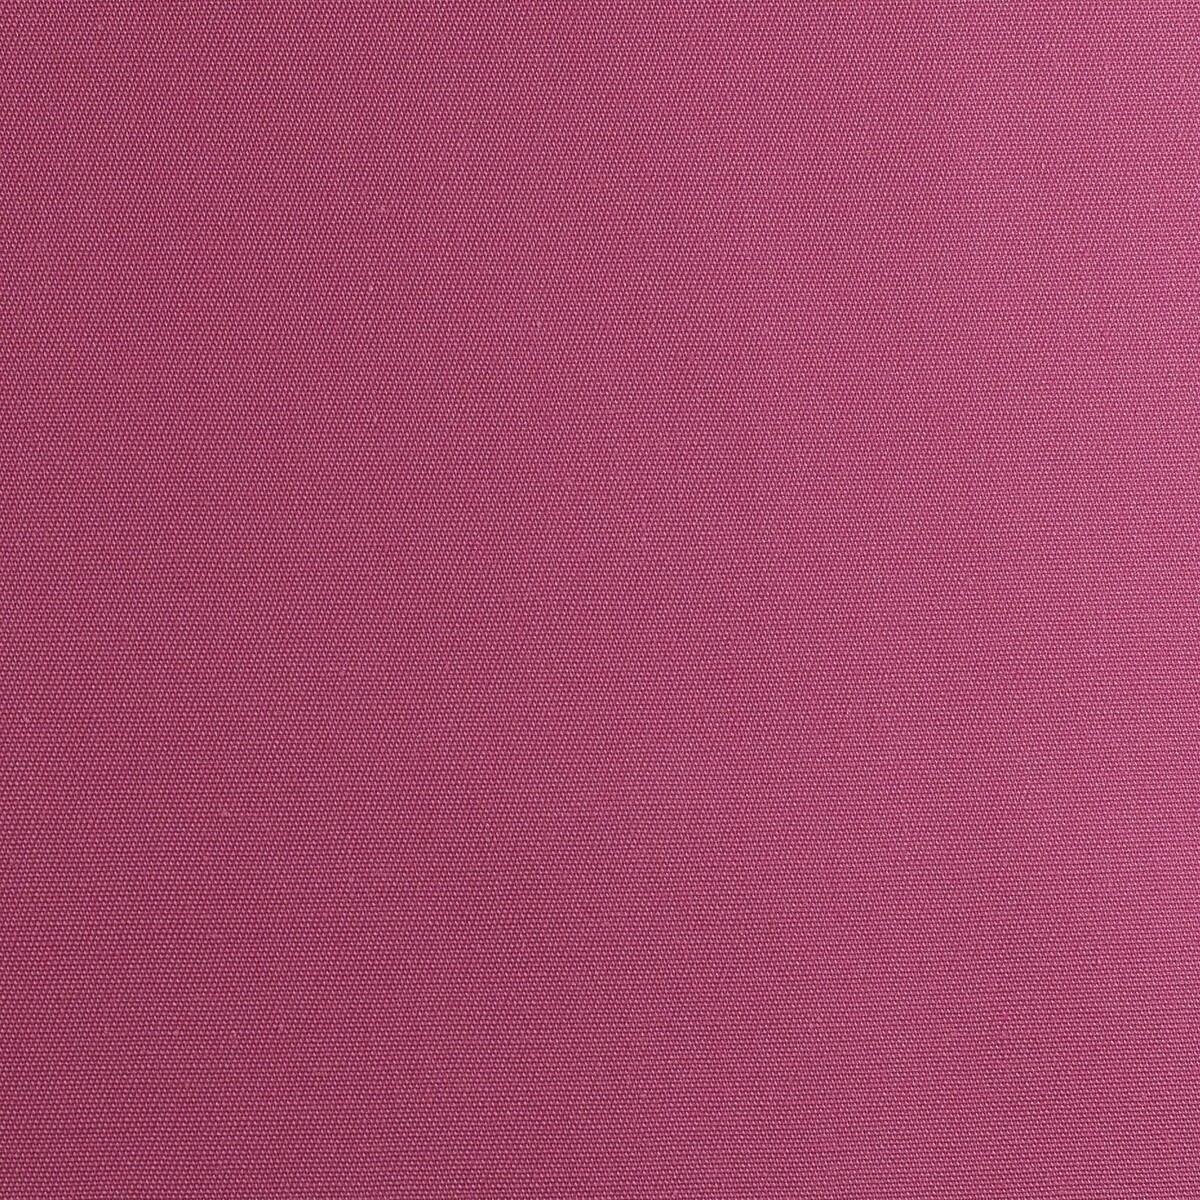 Pale Pink Hemstitch